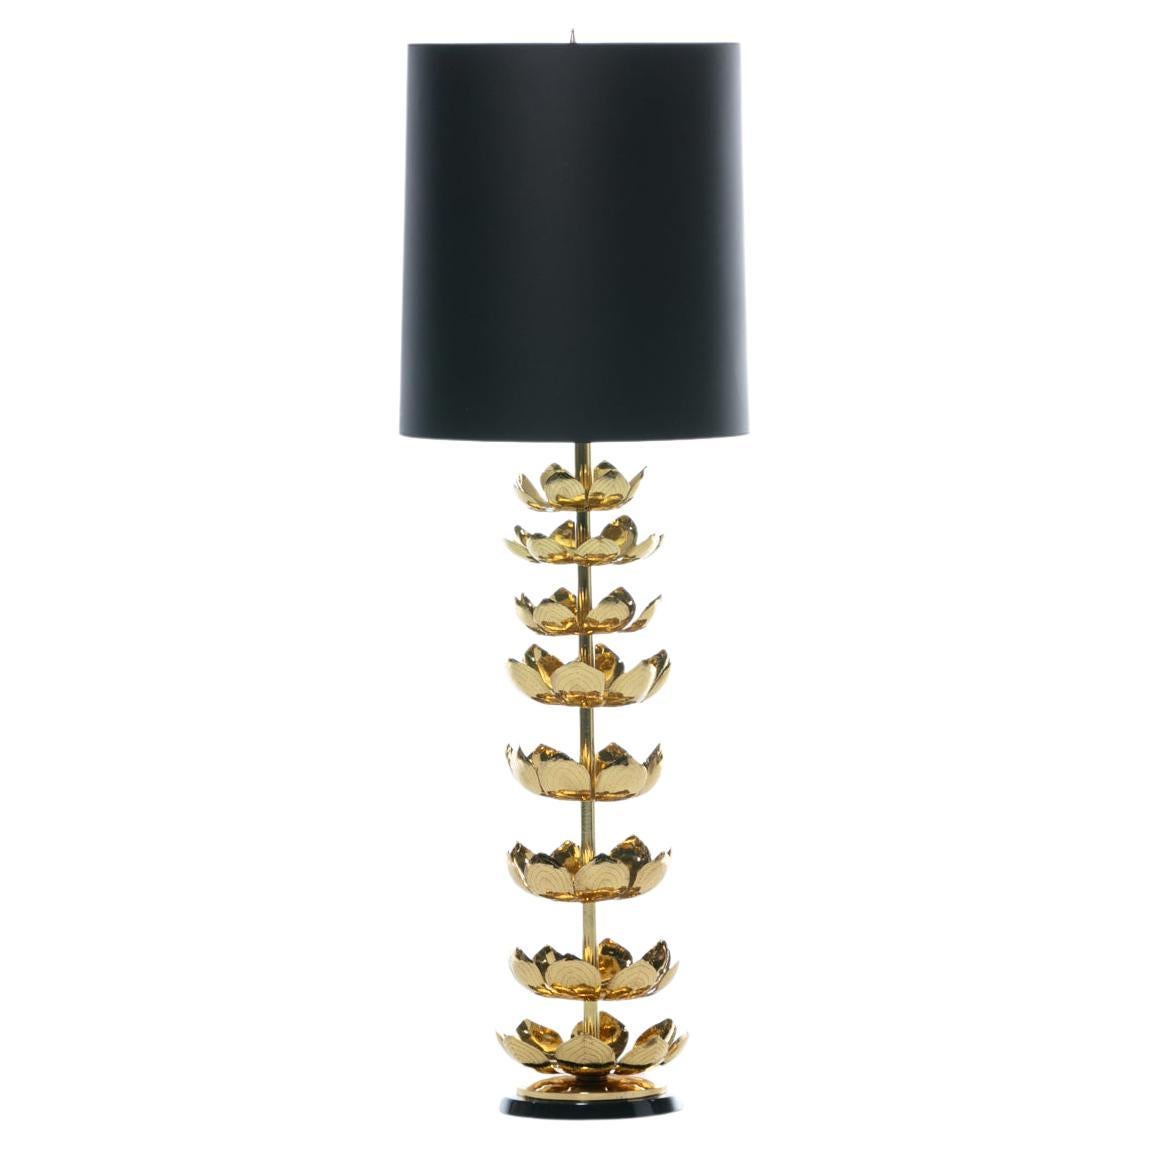 Tall Brass Feldman Lighting Lamp with Lotus Flower Layered Detail c. 1955